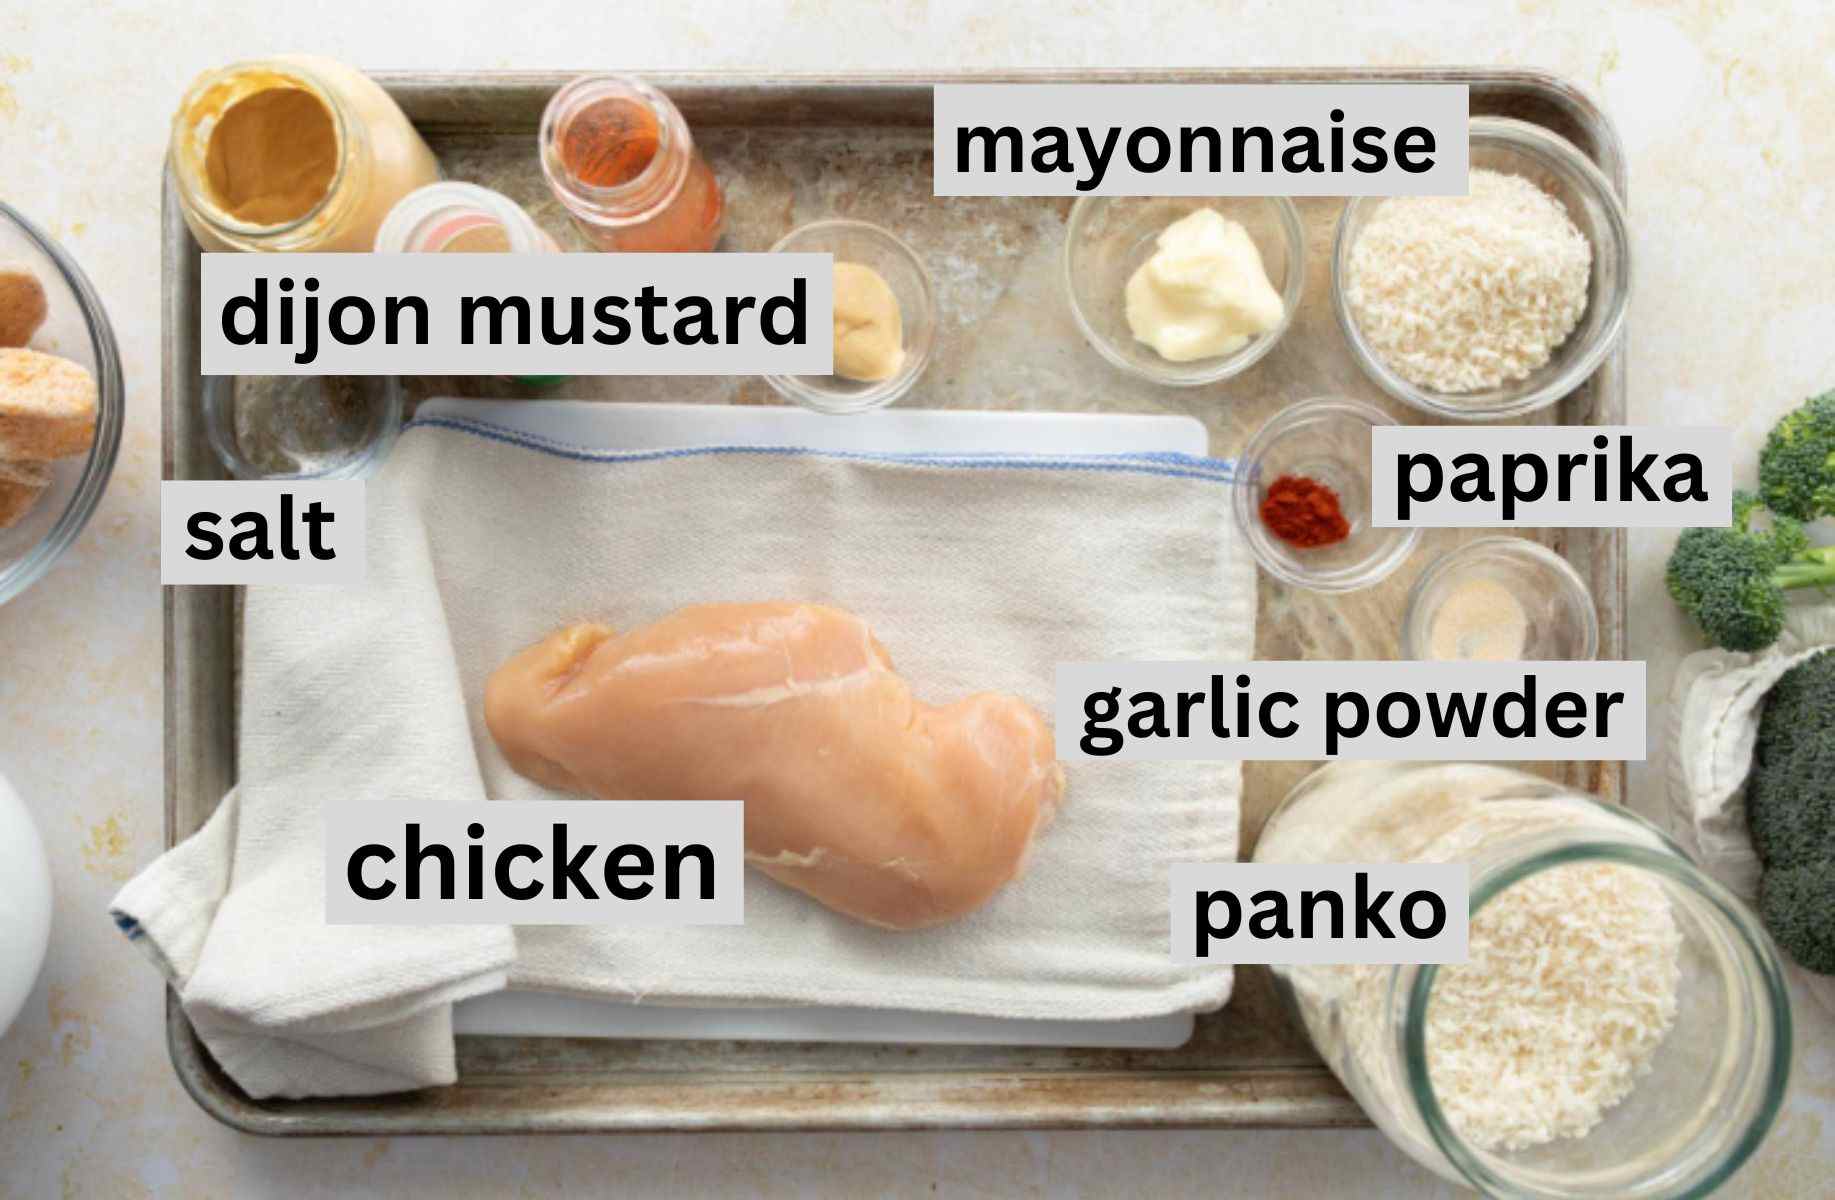 chicken, panko crumbs, spices on baking sheet